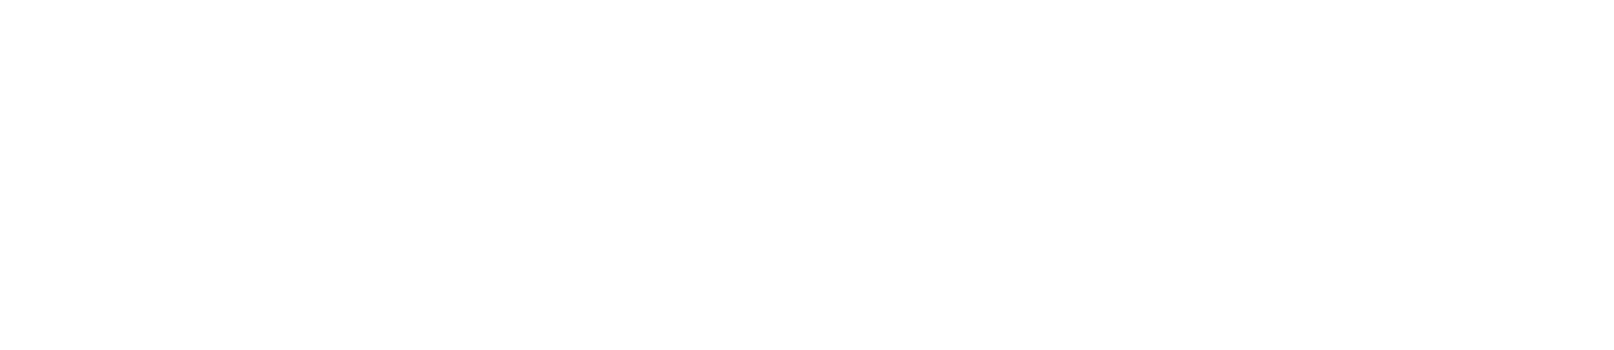 Opendoor logo large for dark backgrounds (transparent PNG)